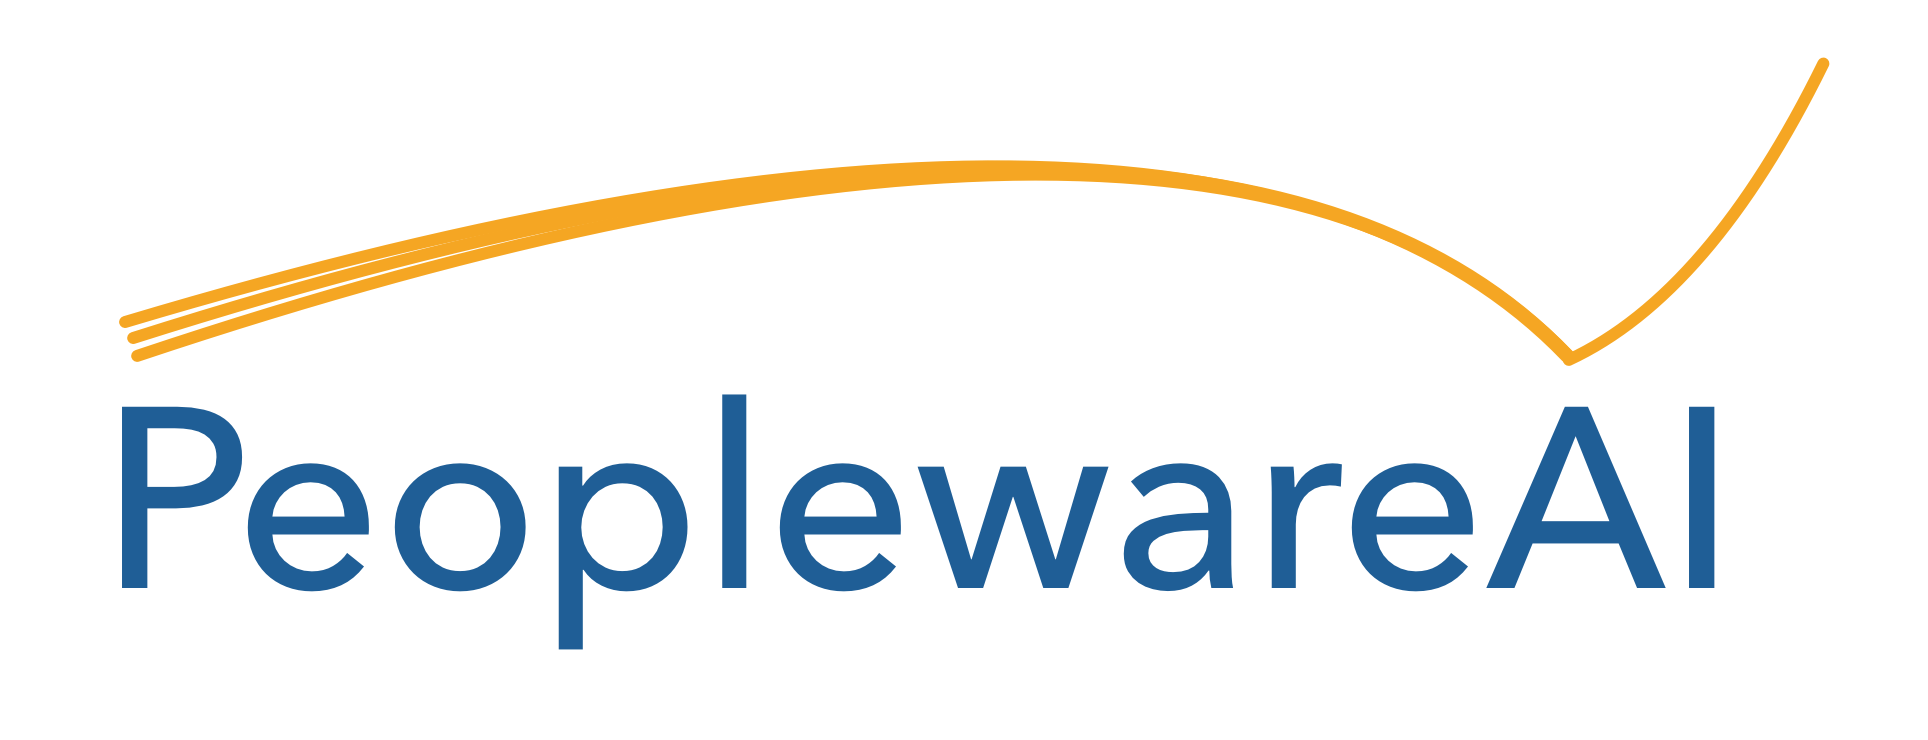 PeoplewareAI logo